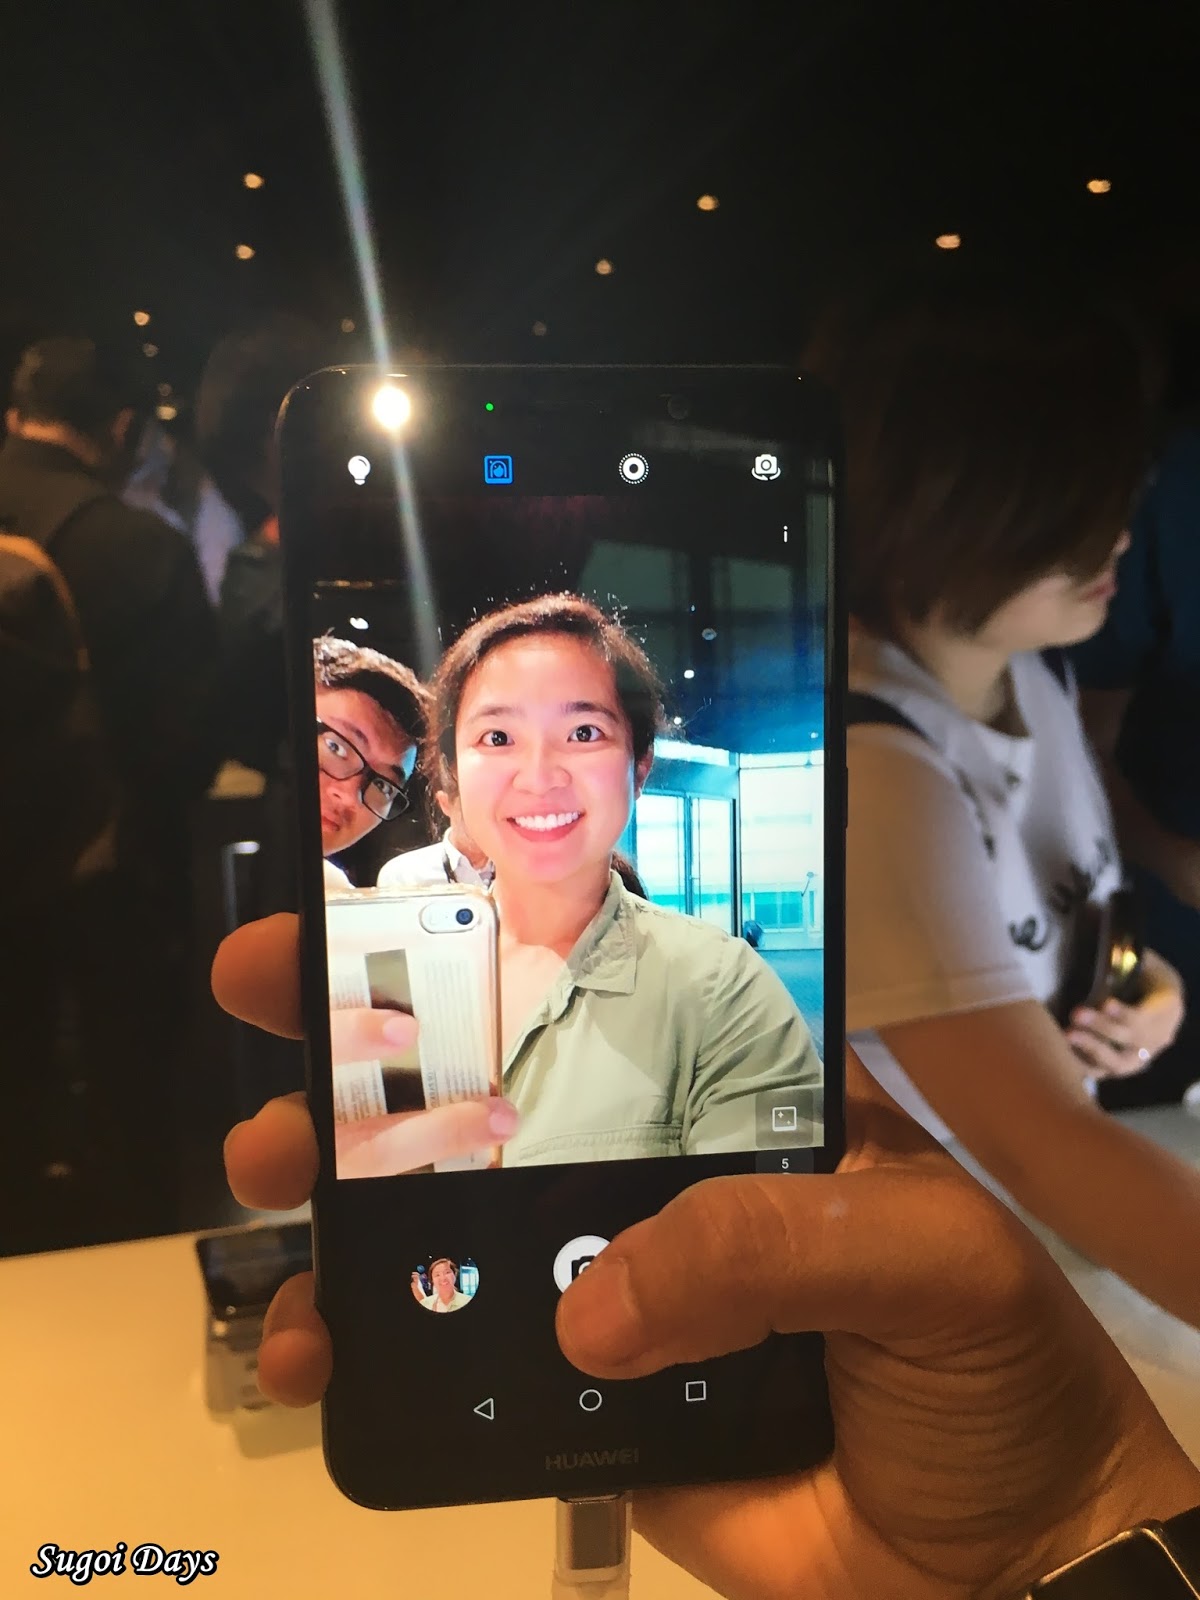 Sugoi Days Introducing The All New Huawei Nova 2i And Its Ambassador